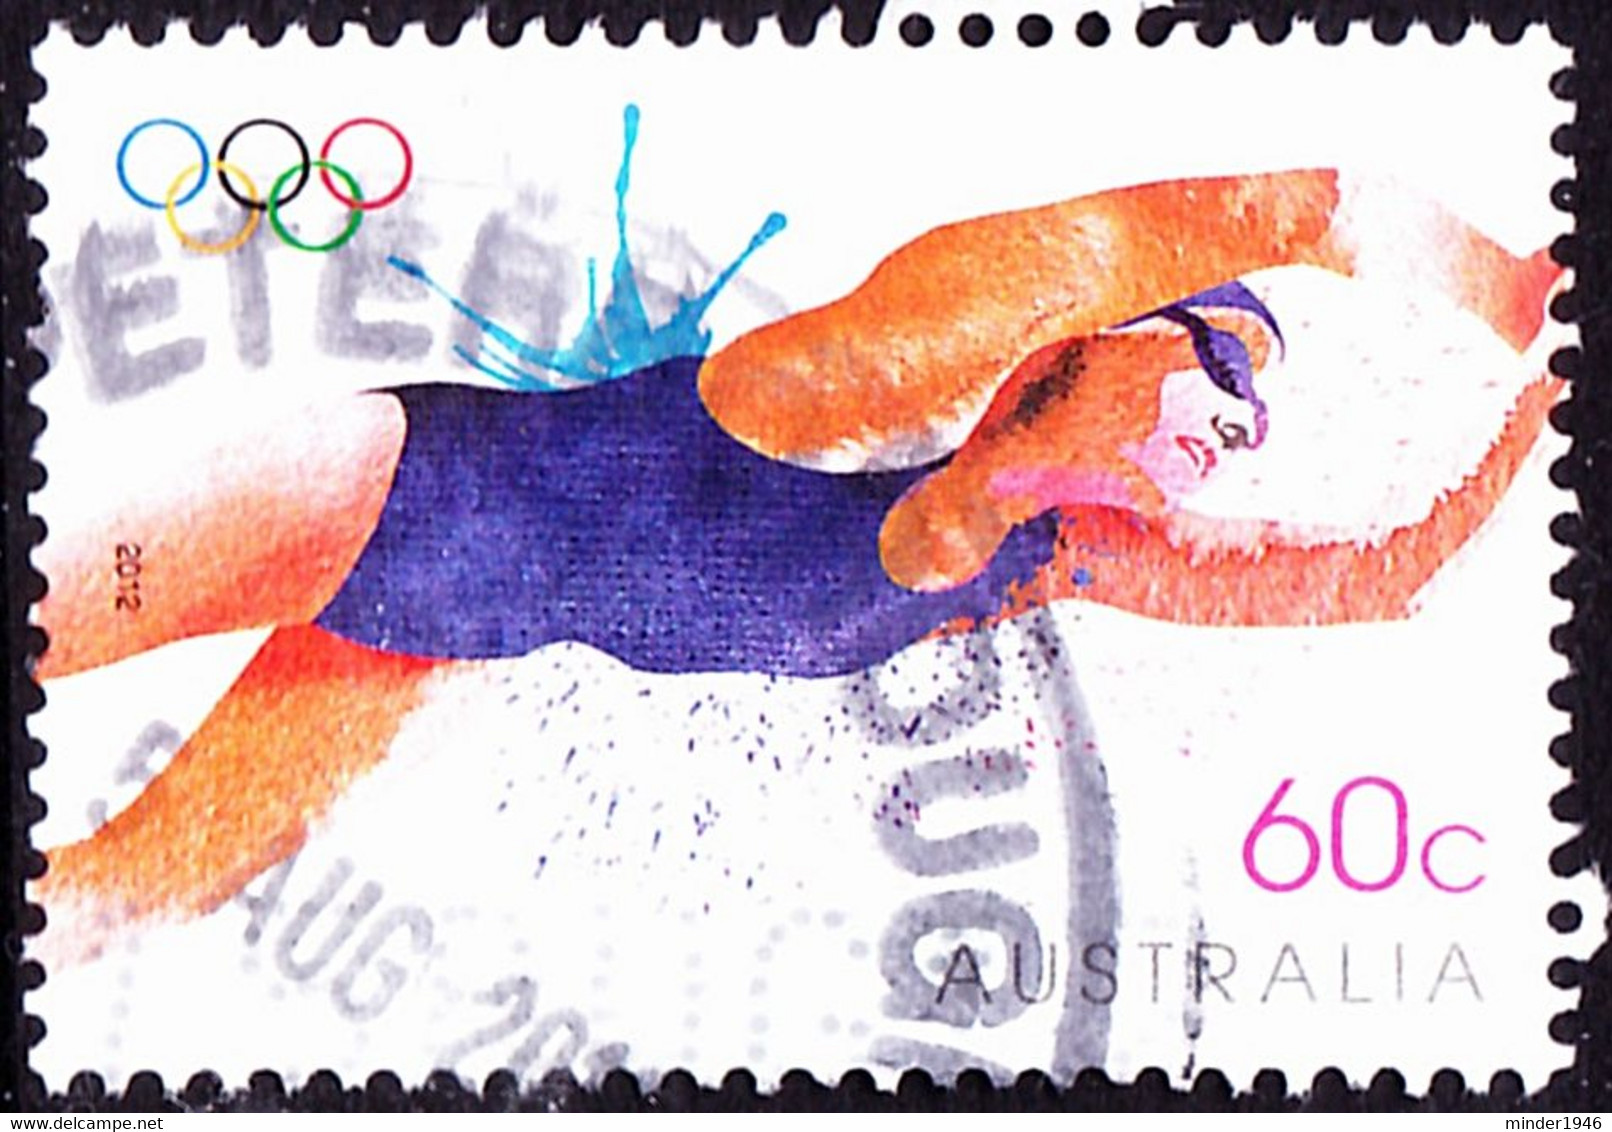 AUSTRALIA 2012 60c Multicoloured Olympic Games London UK-Swimming  FU - Used Stamps